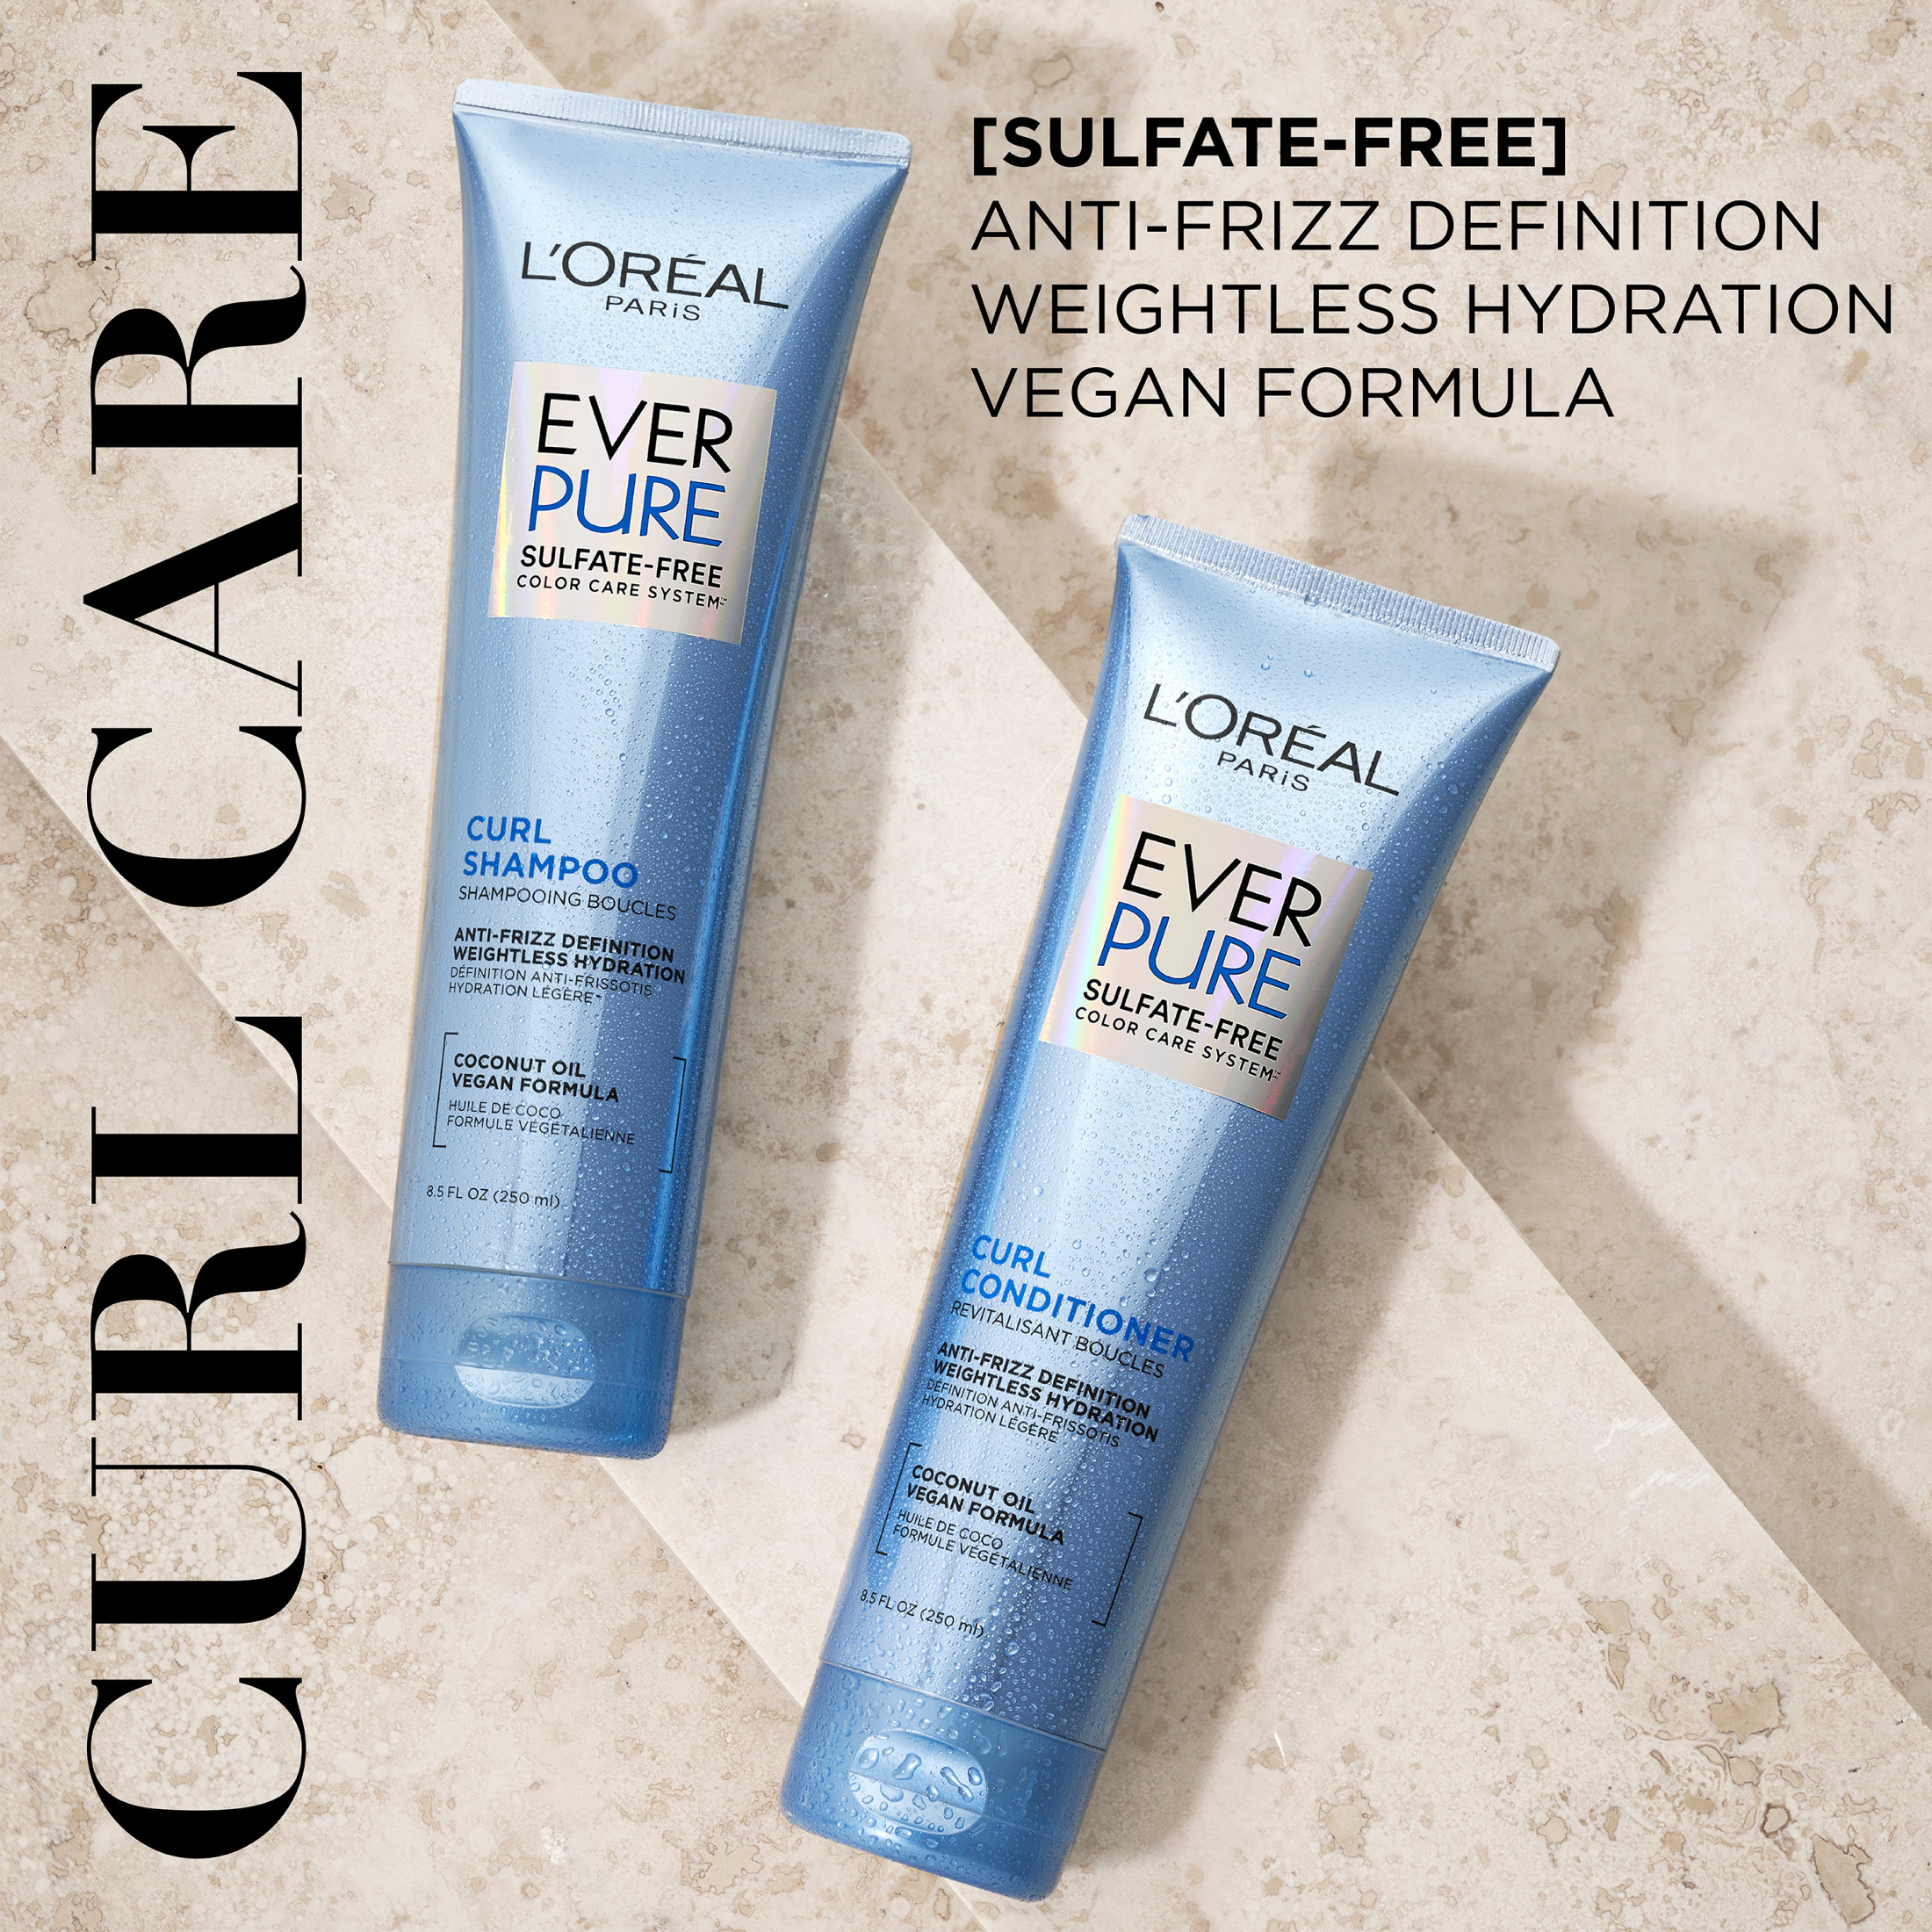 L'Oreal Paris Evercurl Sulfate Free Curl Care System Hydracharge Shampoo, 8.5 fl oz - image 2 of 10